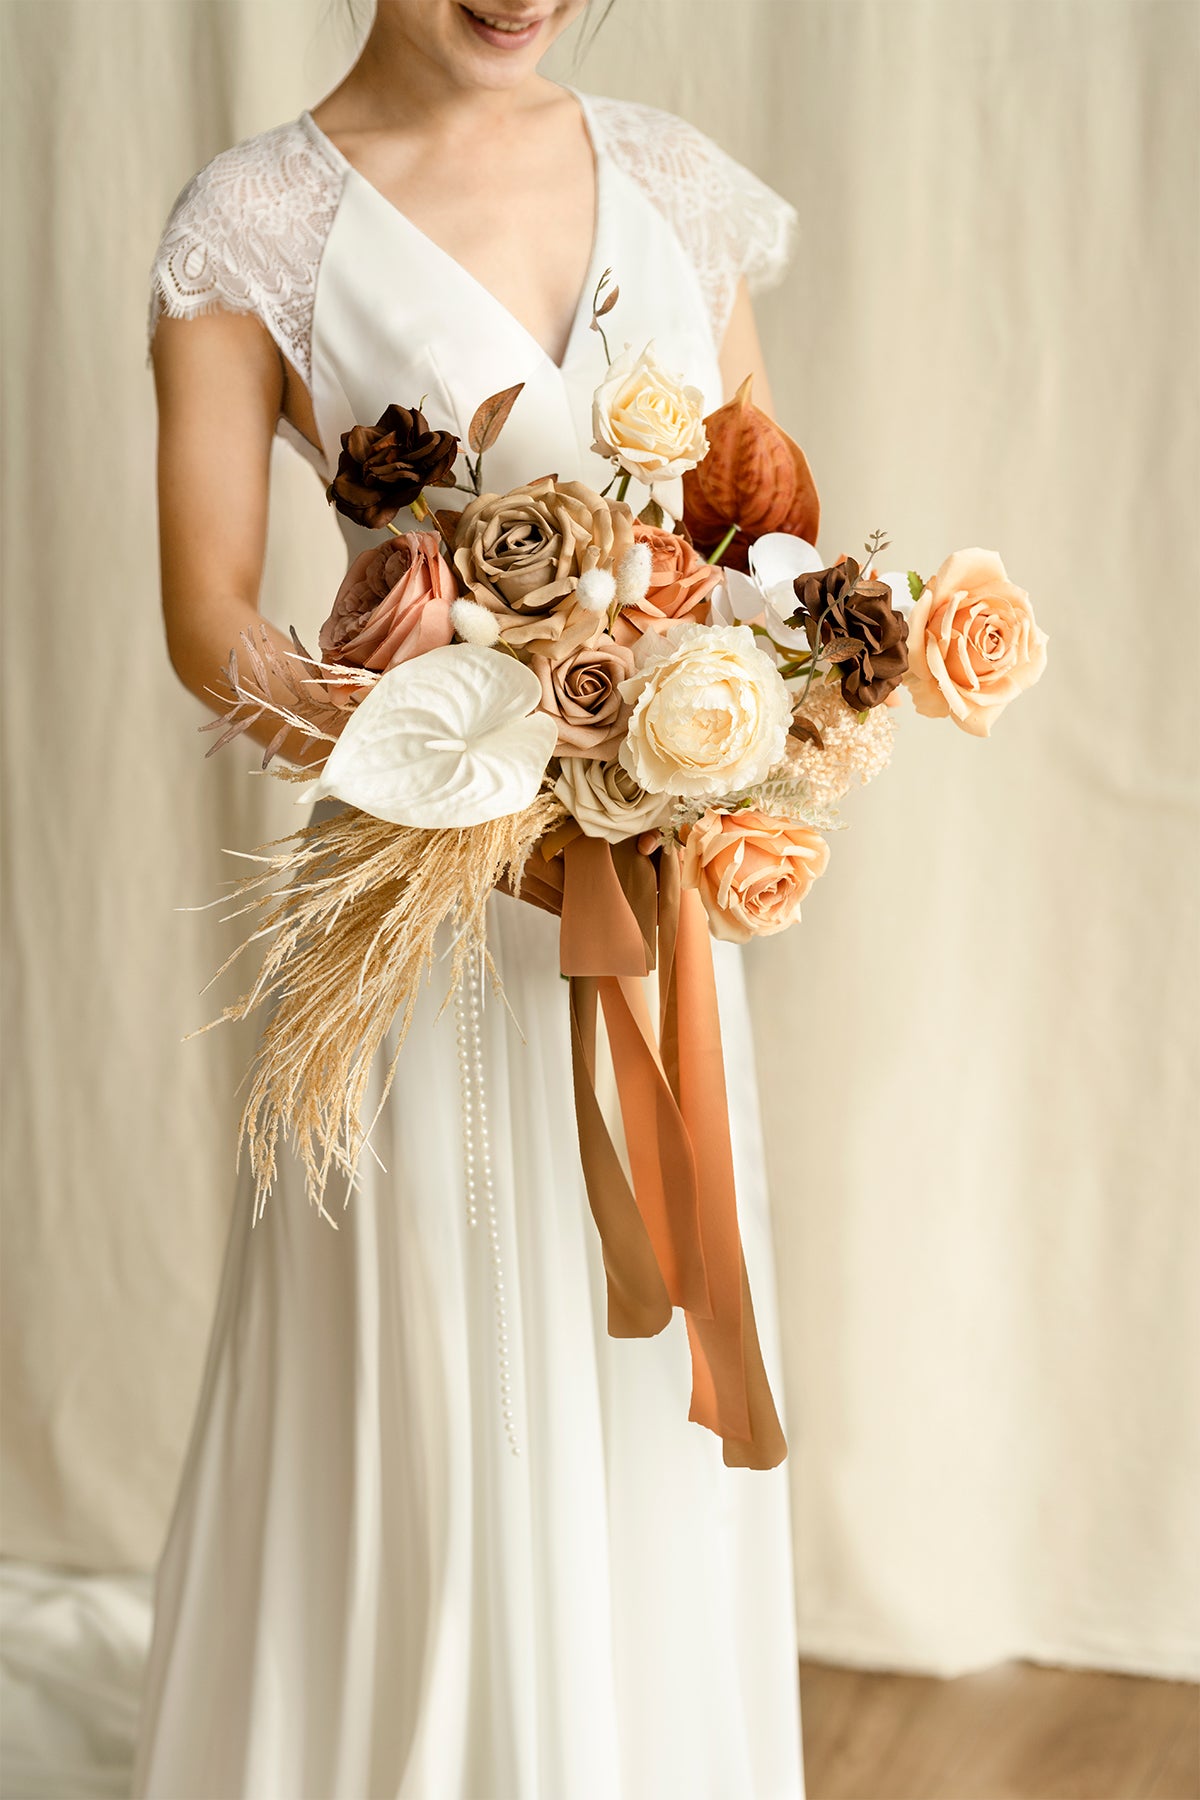 Pre-Arranged Wedding Flower Packages in Rust & Sepia